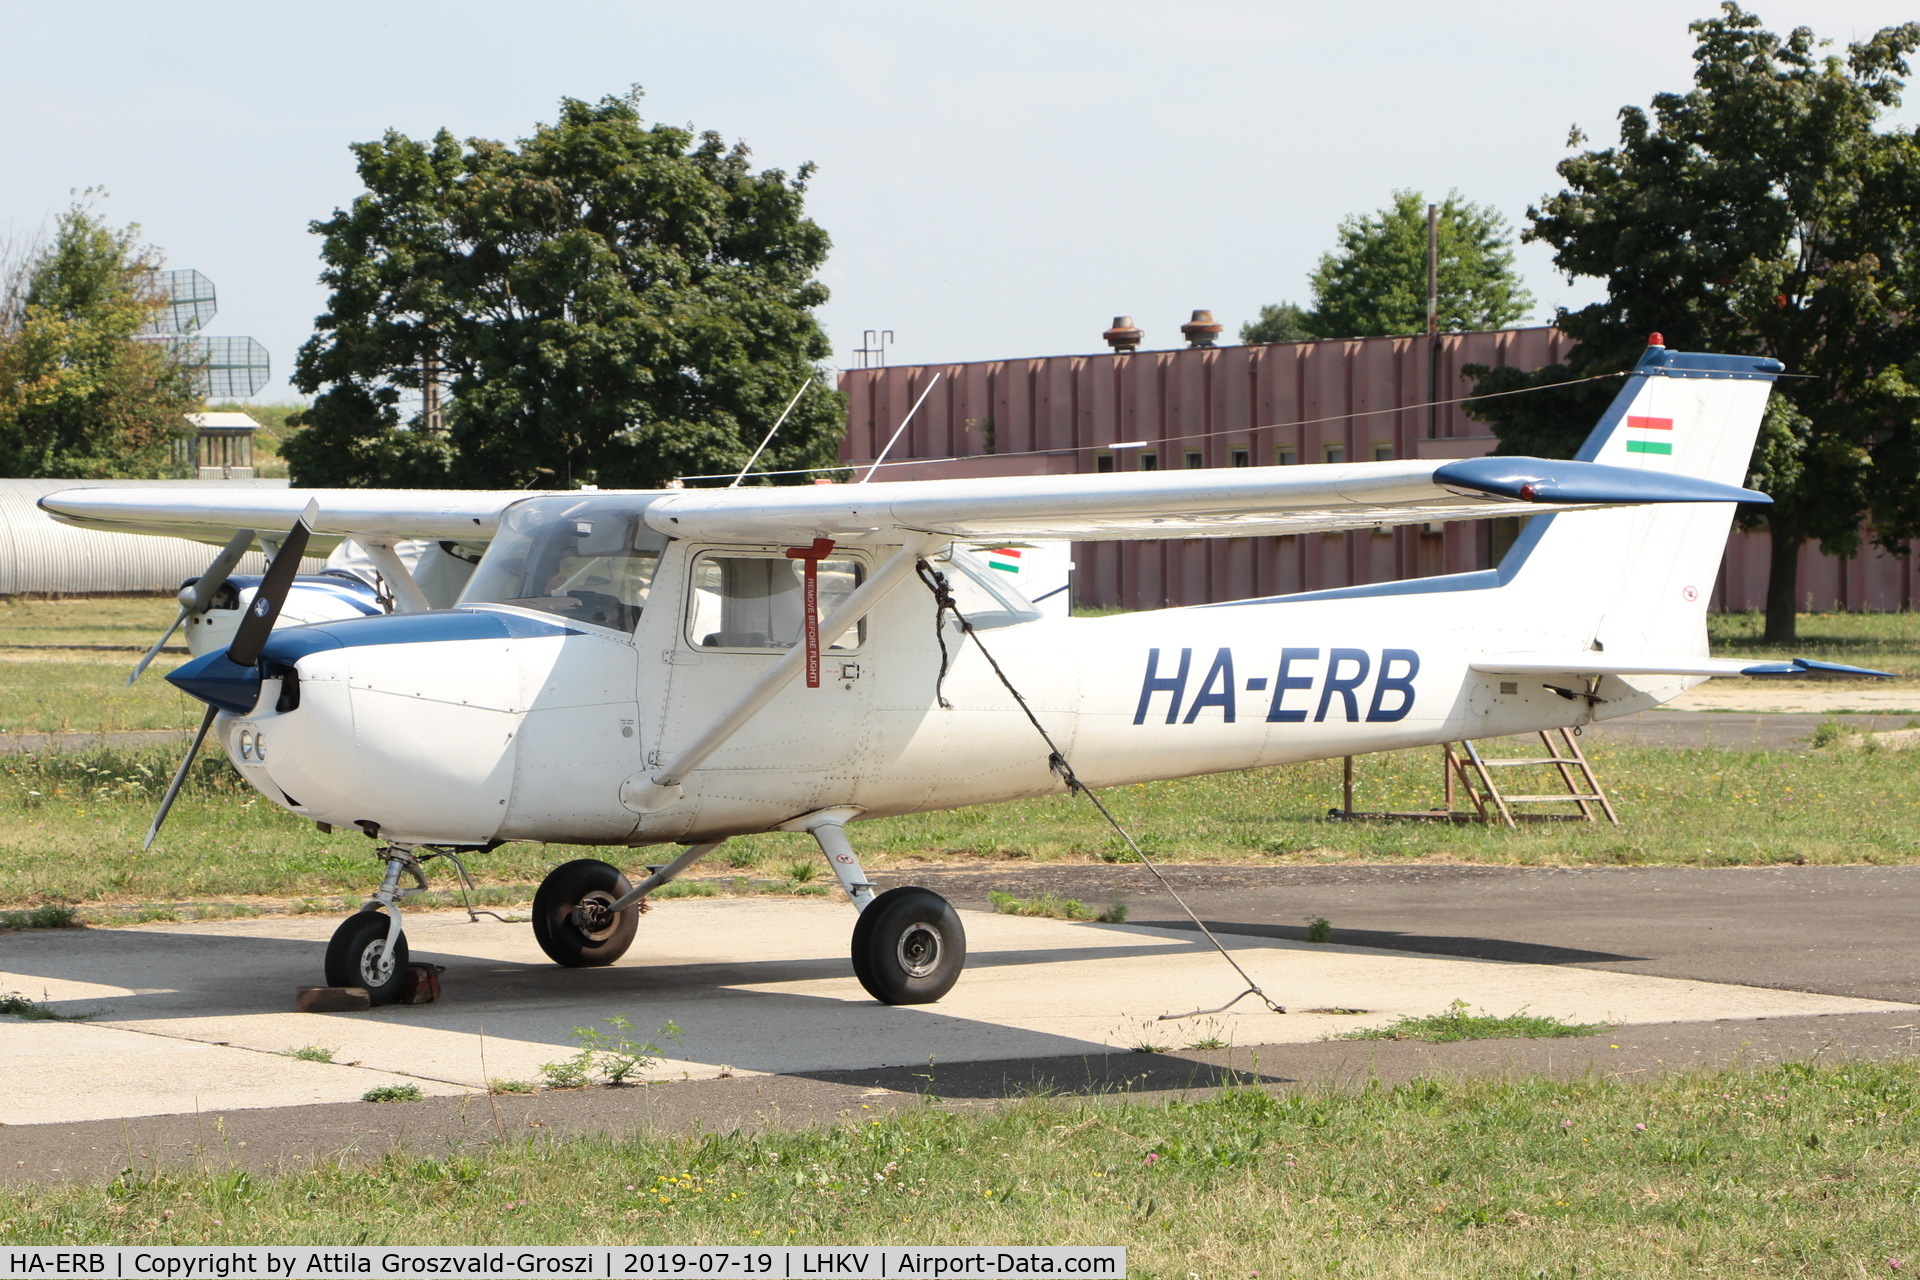 HA-ERB, 1974 Reims F150L C/N 1014, LHKV - Kaposujlak Airport, Hungary / 2019